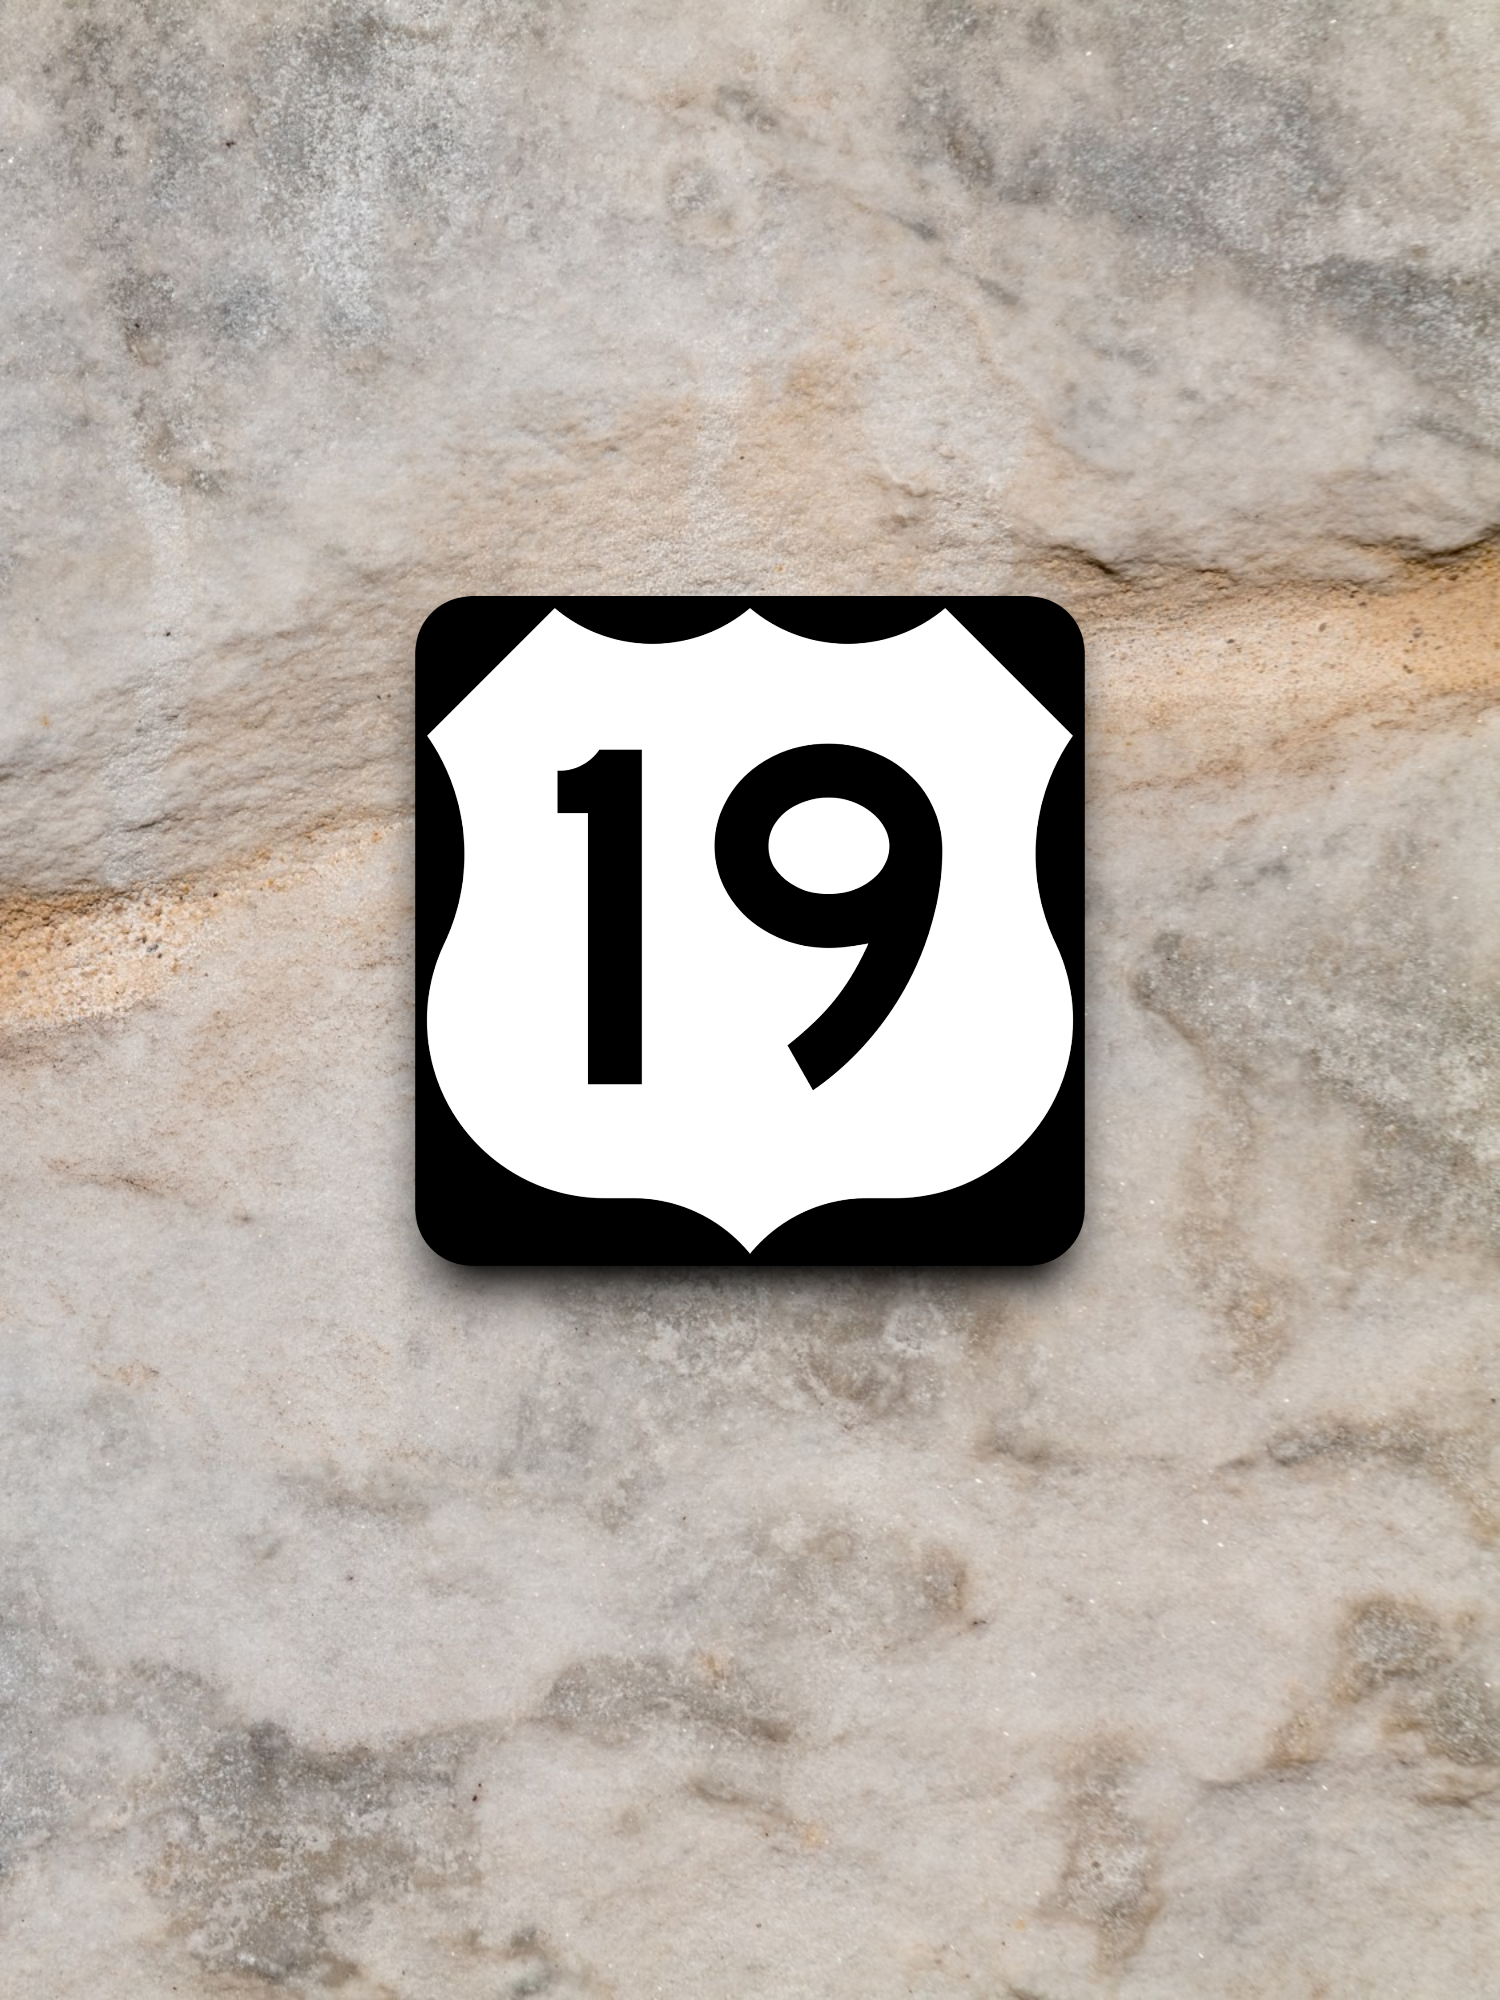 U.S. Route 19 Road Sign Sticker